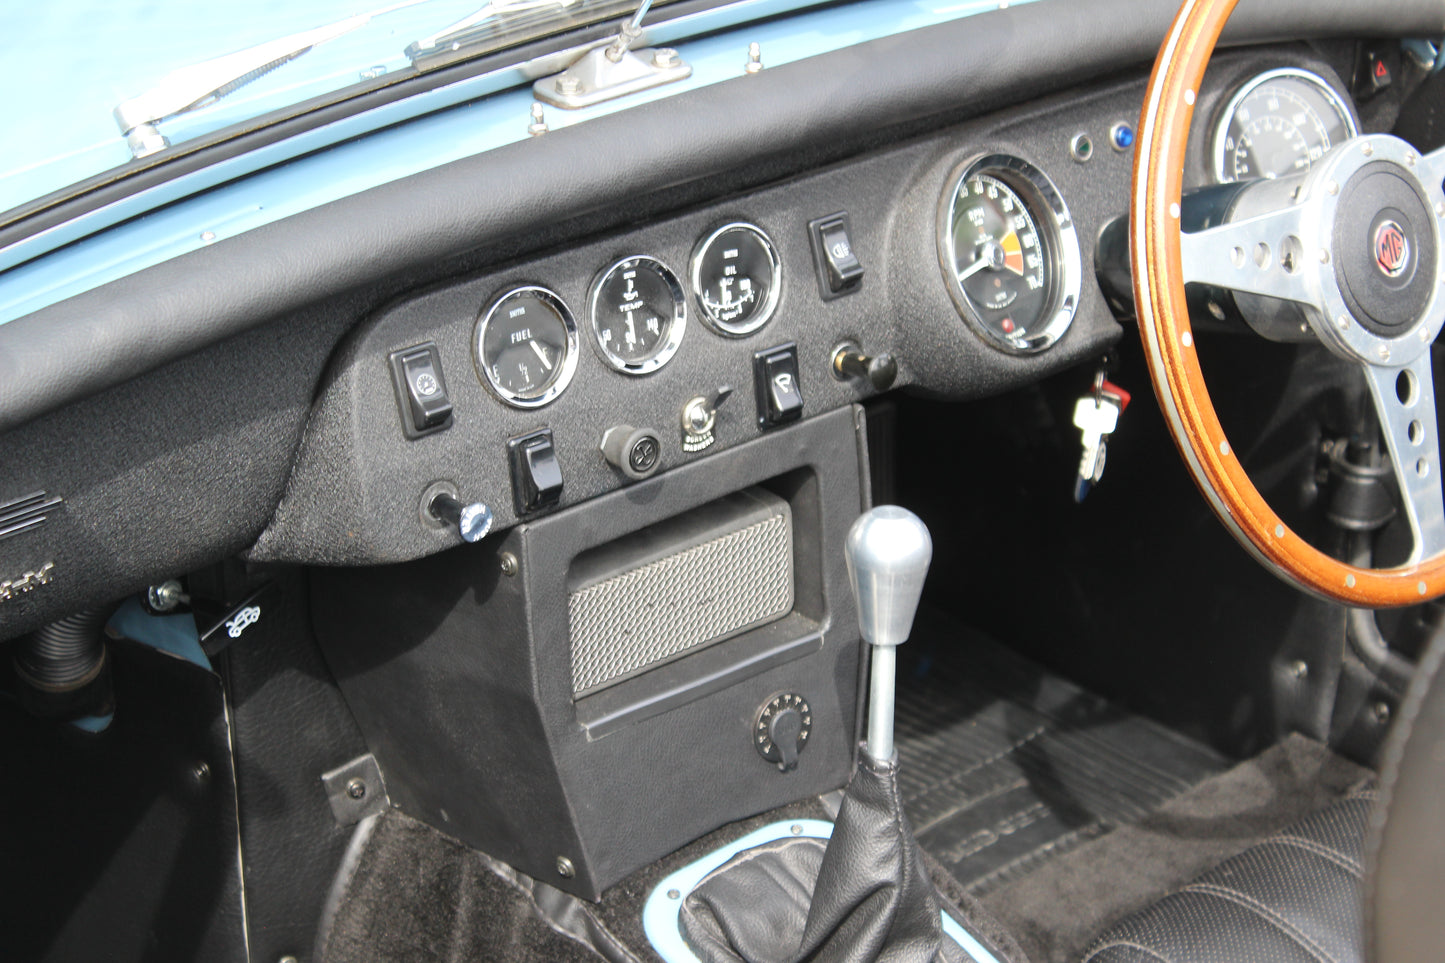 1973 MG Midget 'Twin-Cam' 16v Build 'Restomod'